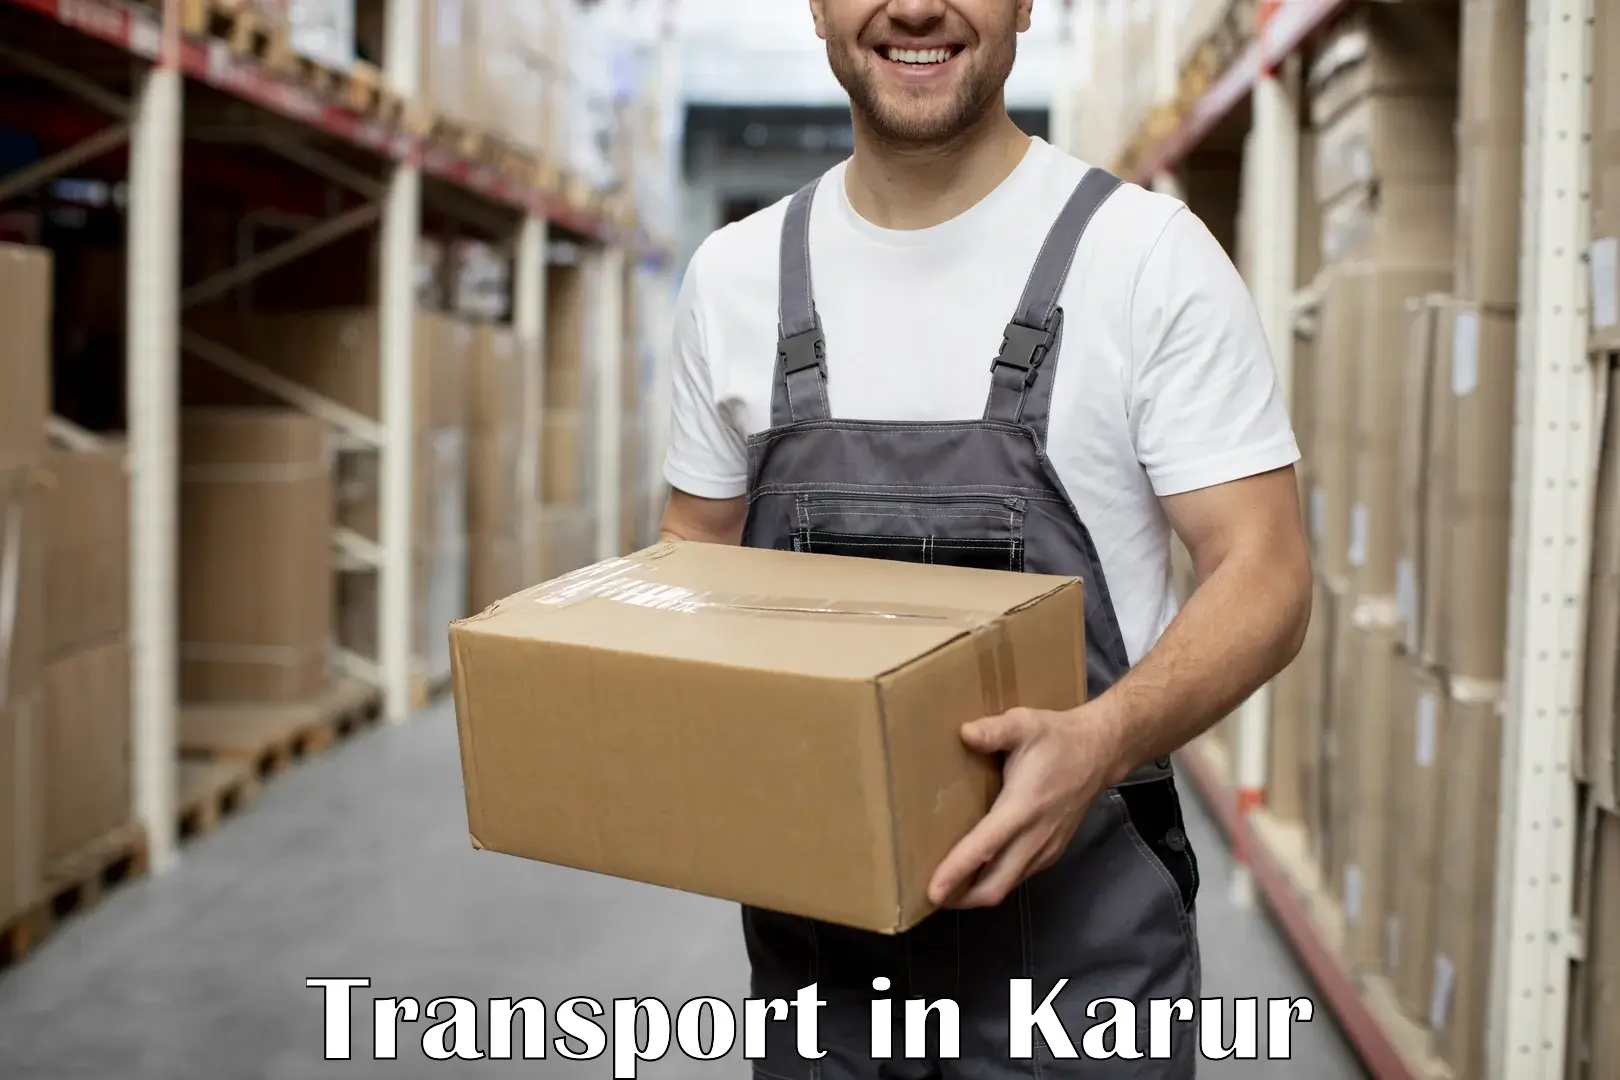 Transport in sharing in Karur